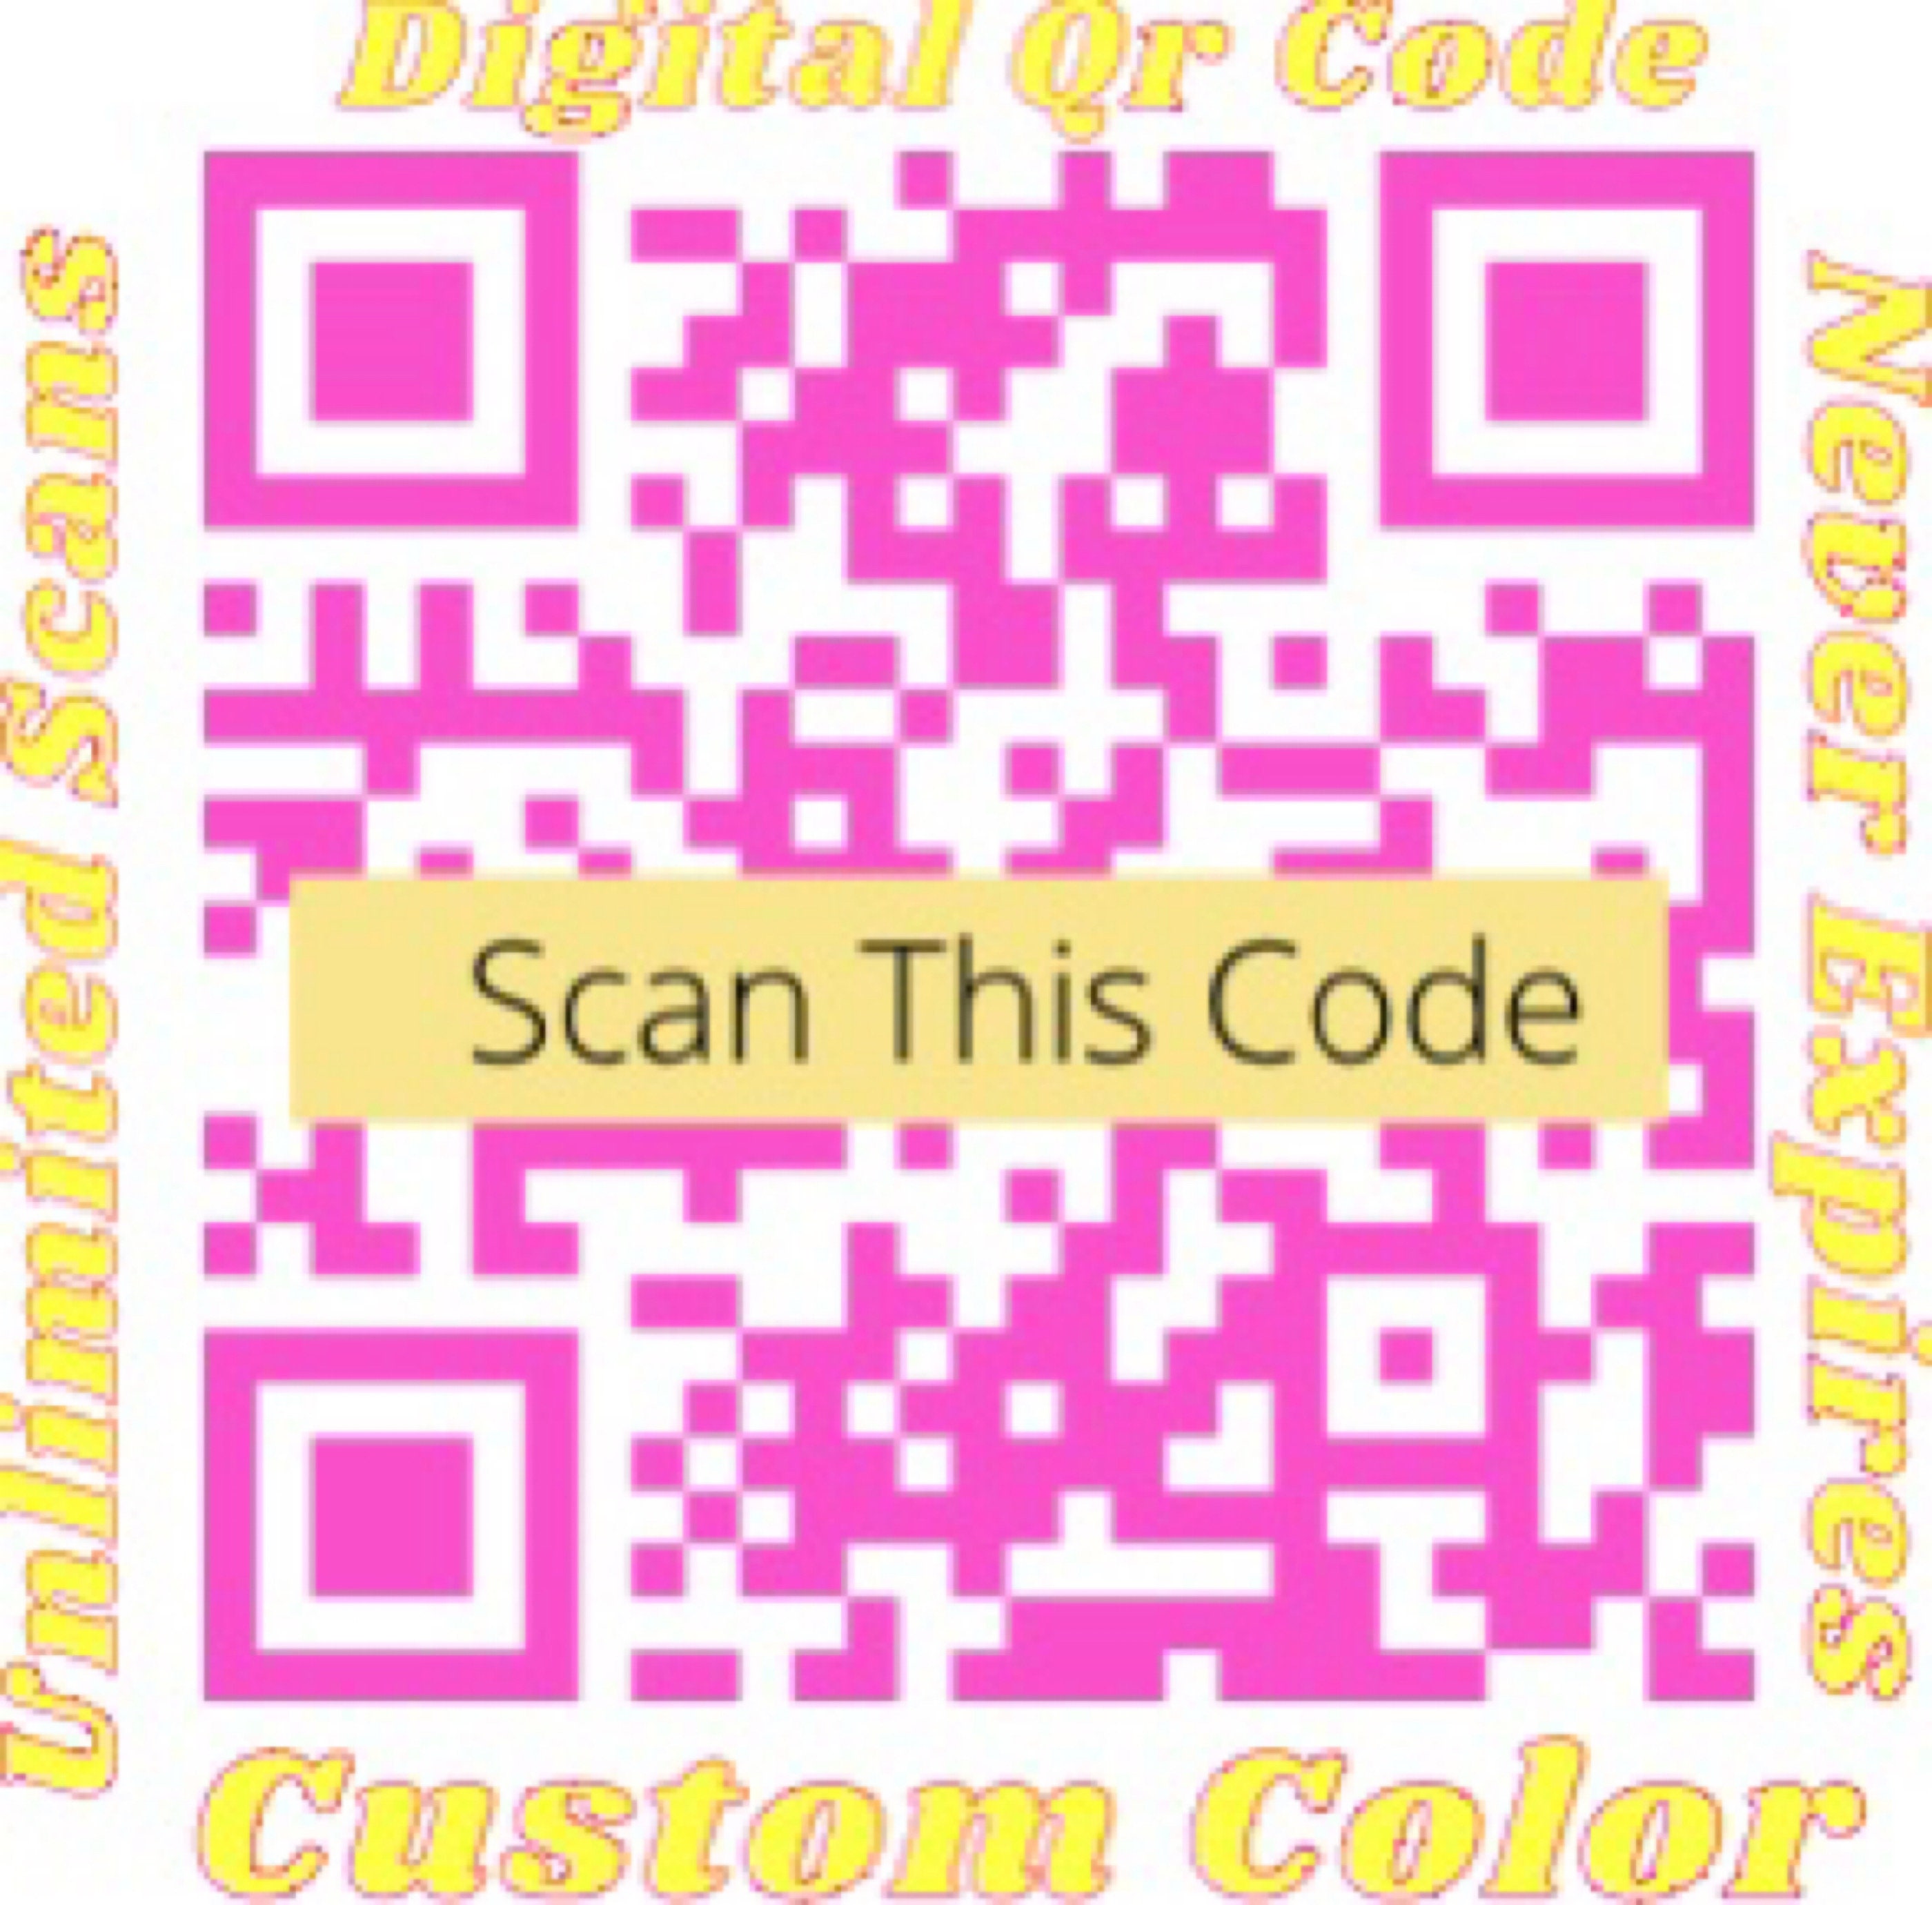 Digital Qr Code Download Scan to Pay Qr Code Qr Codes for Weddings, Baby  Shower Registry, Business Cards, Signs Custom Qr Codes - Etsy | Erlebnis & Shopping Gutscheine